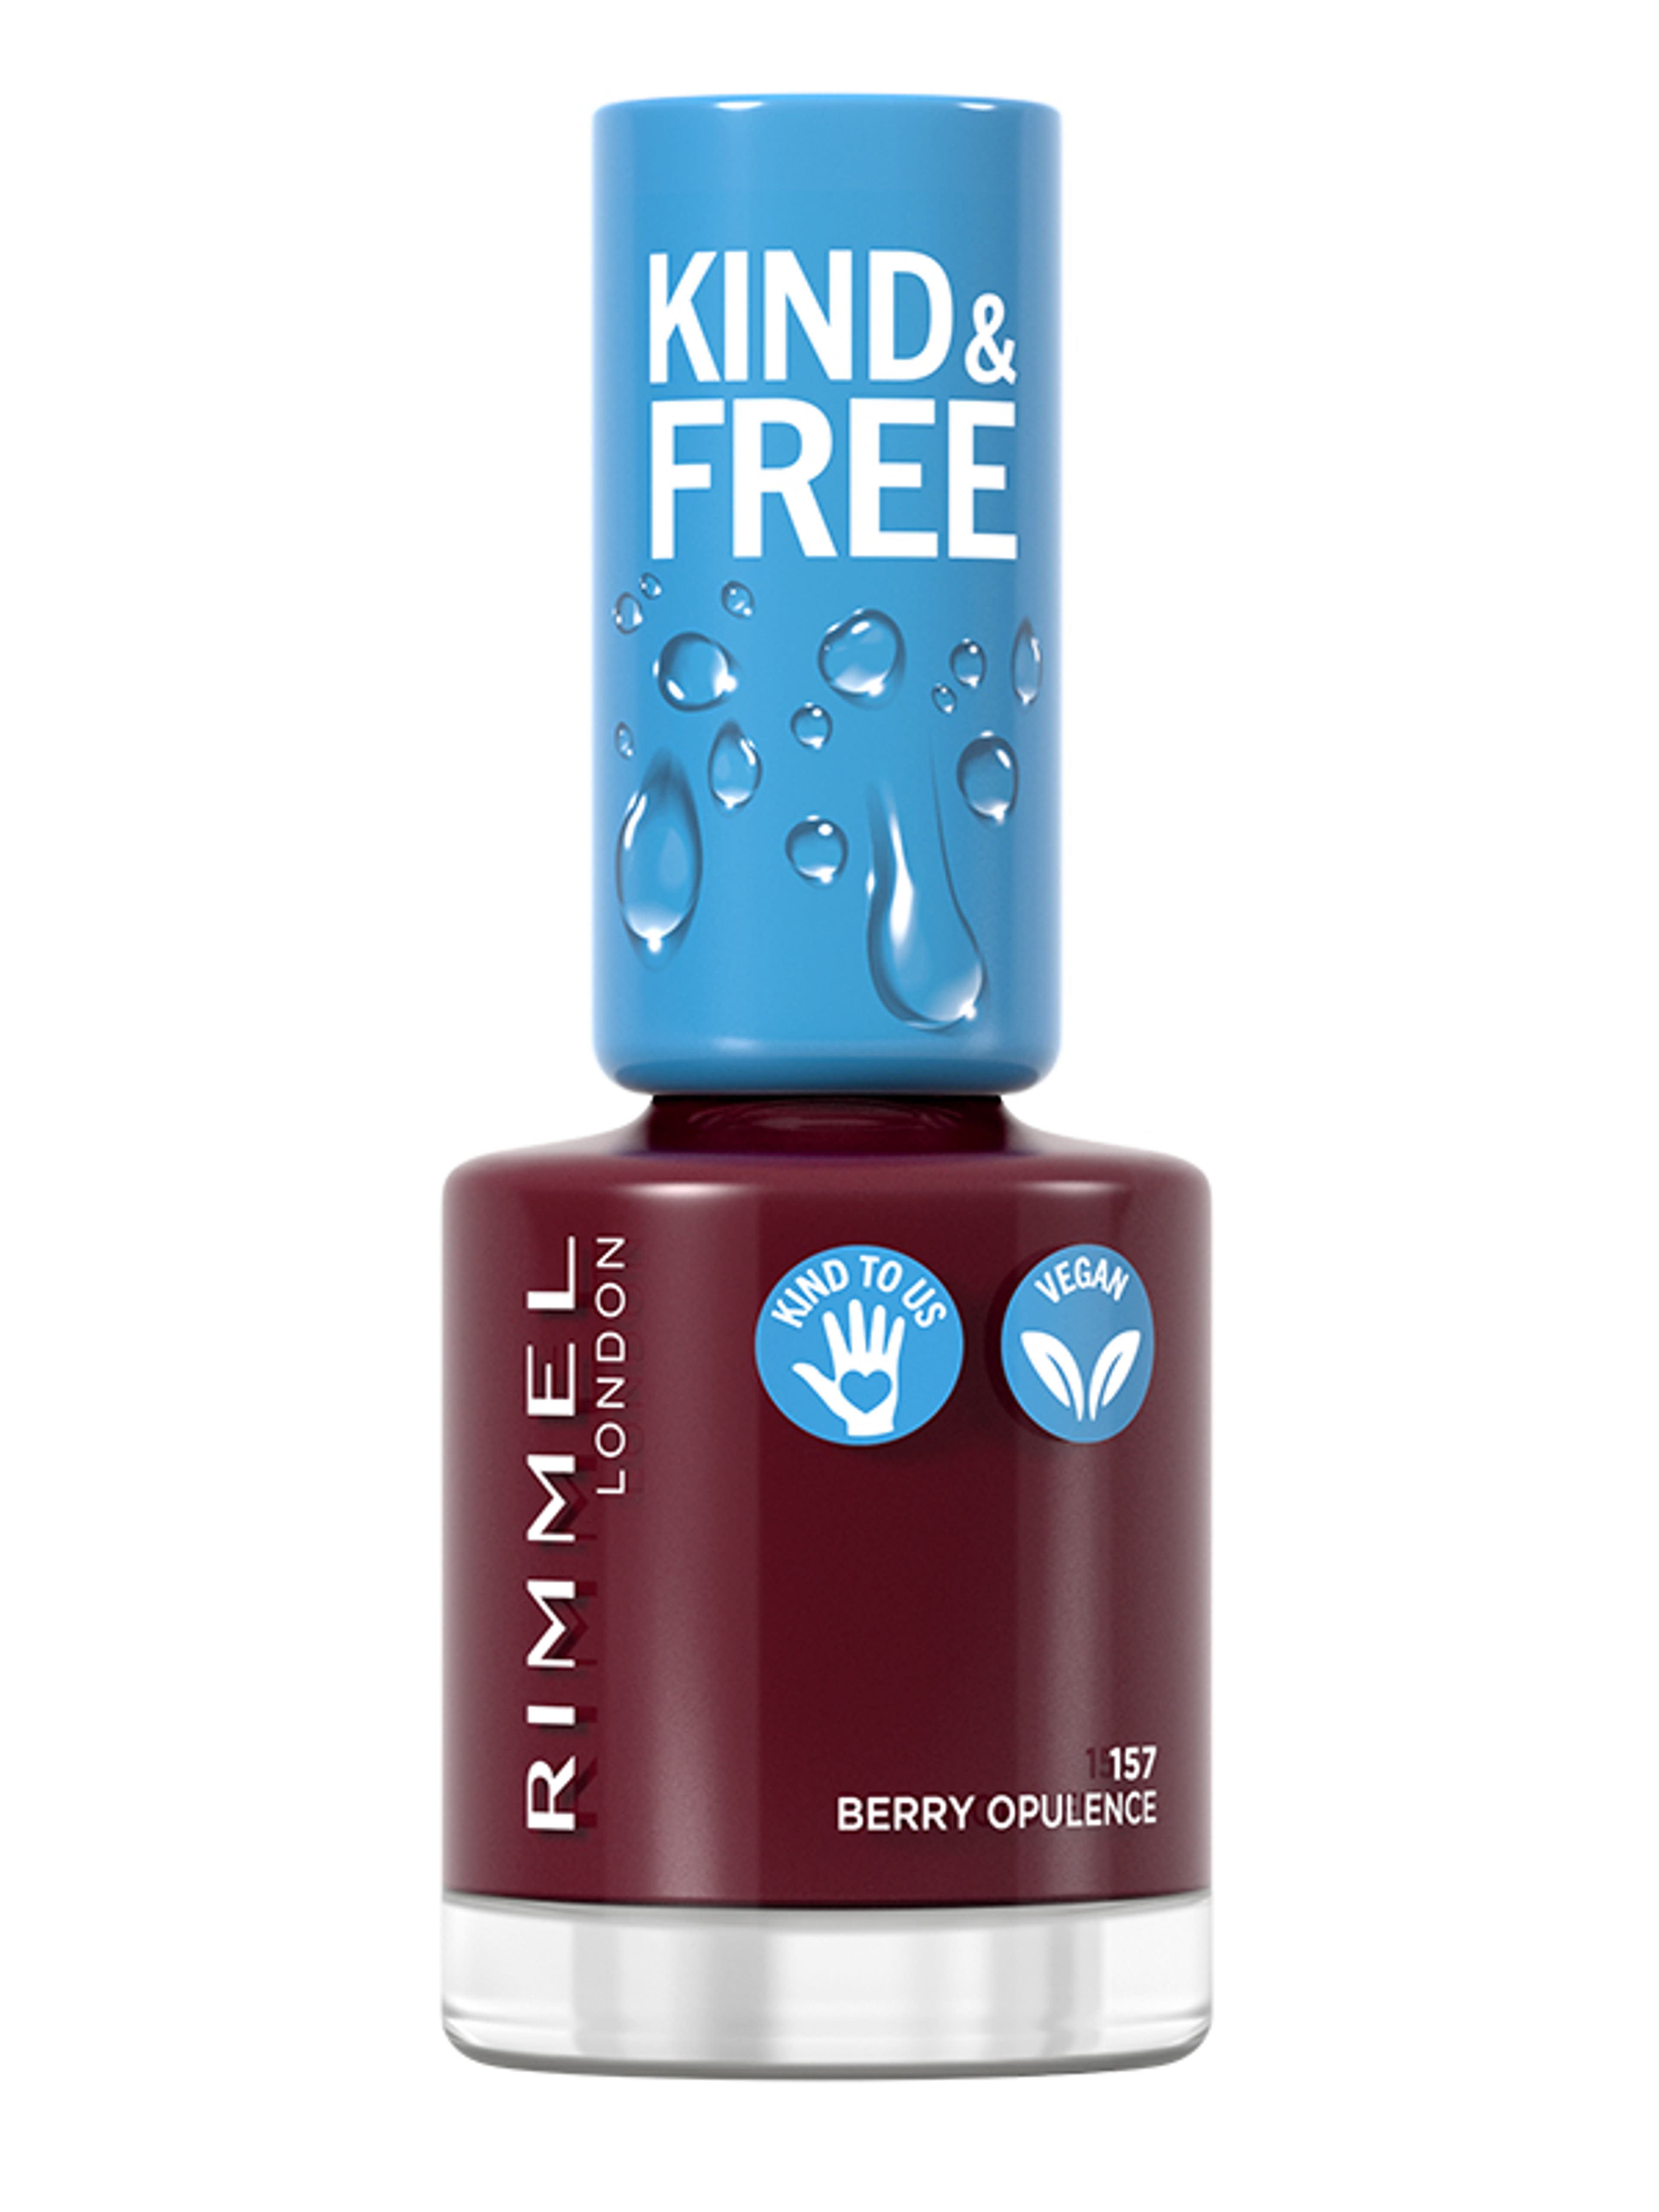 Rimmel Kind&Free lakk /157 - 1 db-1